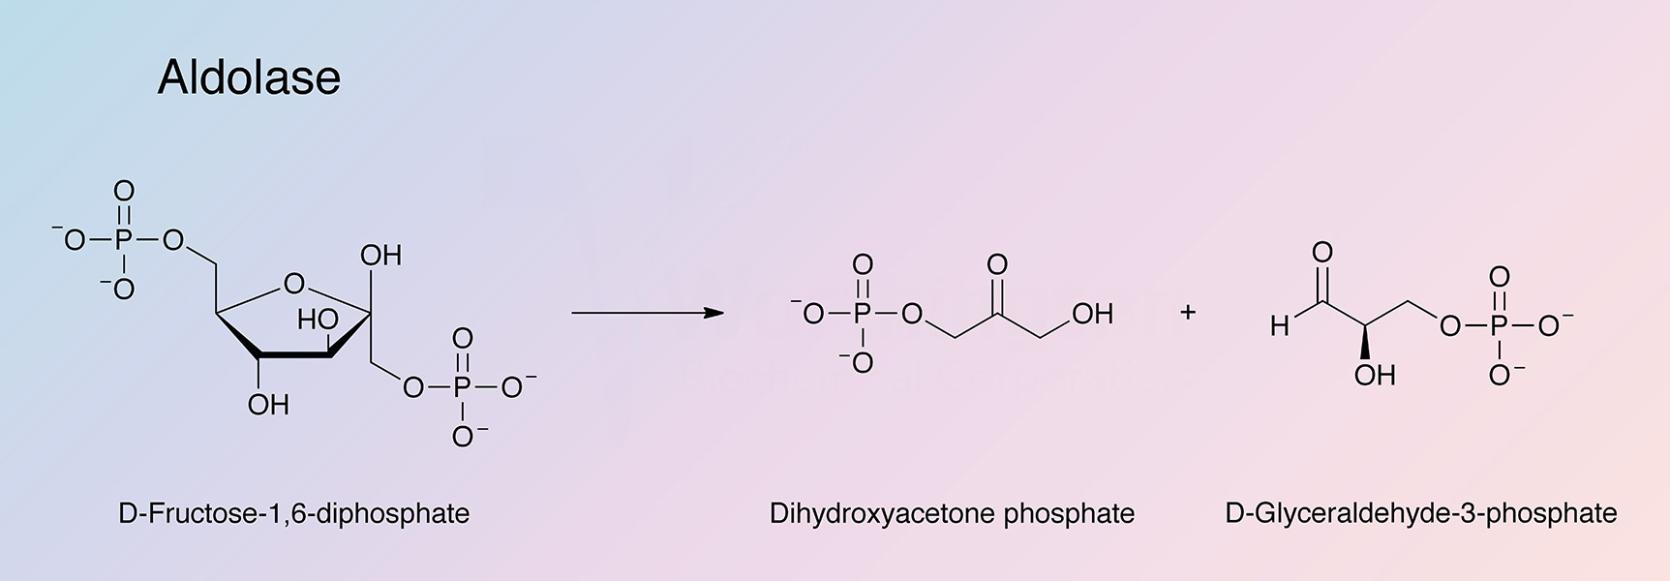 Aldolase Enzymatic Reaction